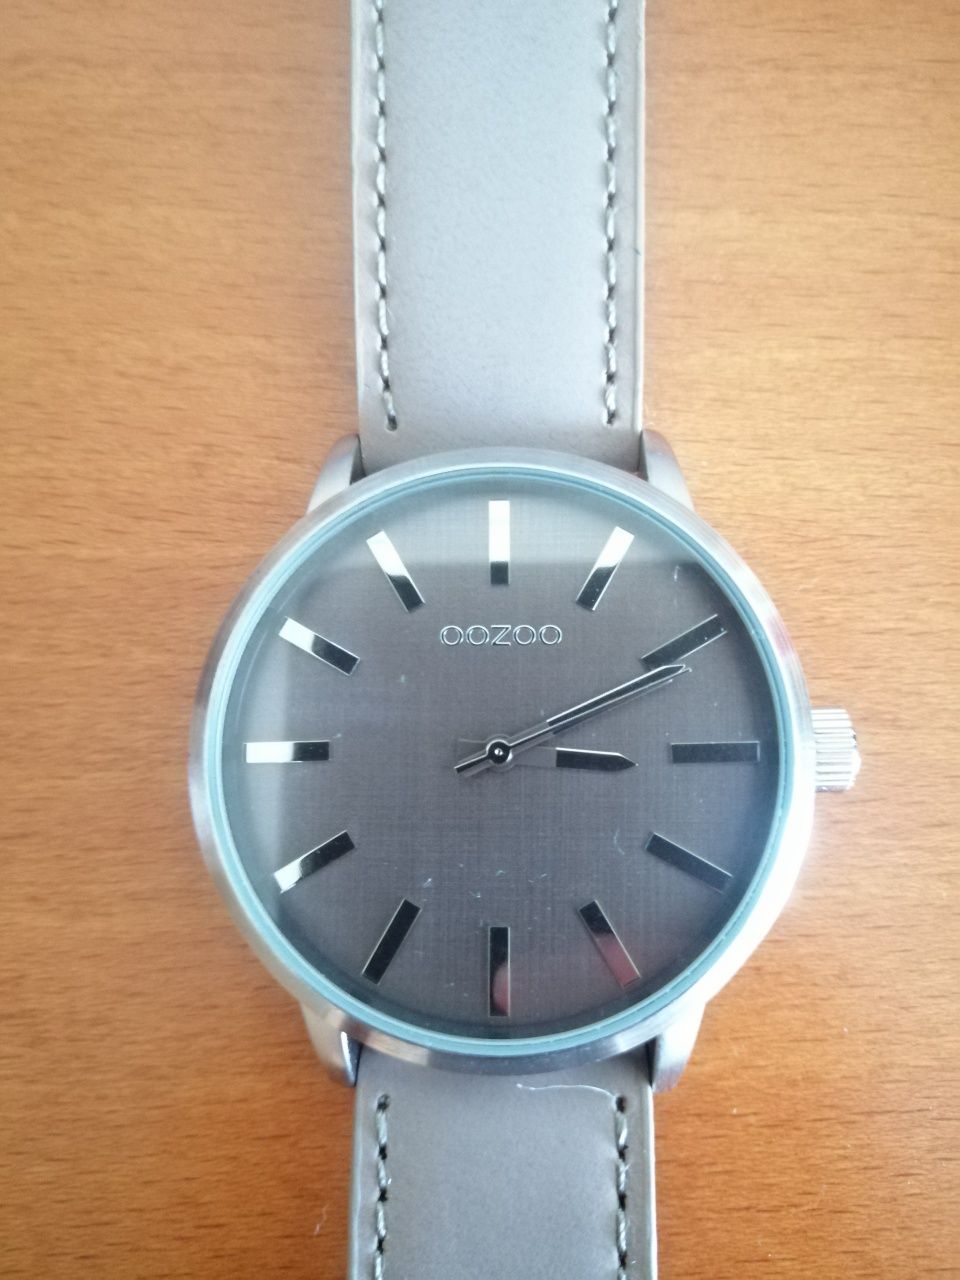 Relógio Oozzo Timepieces